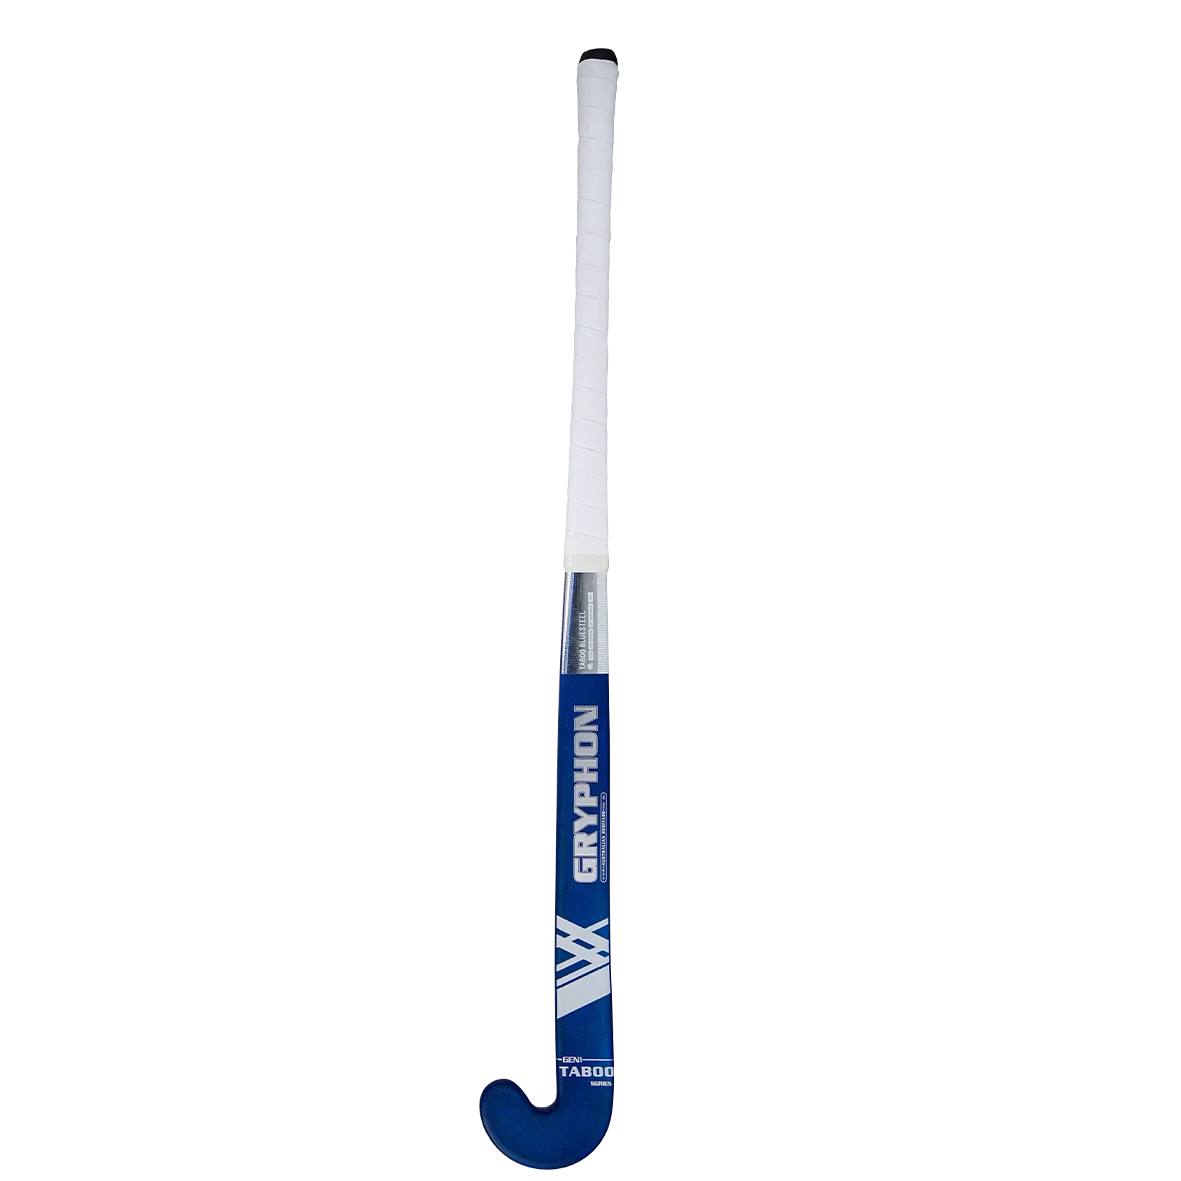 Gryphon Taboo Bluesteel GXX3 Hockey Stick